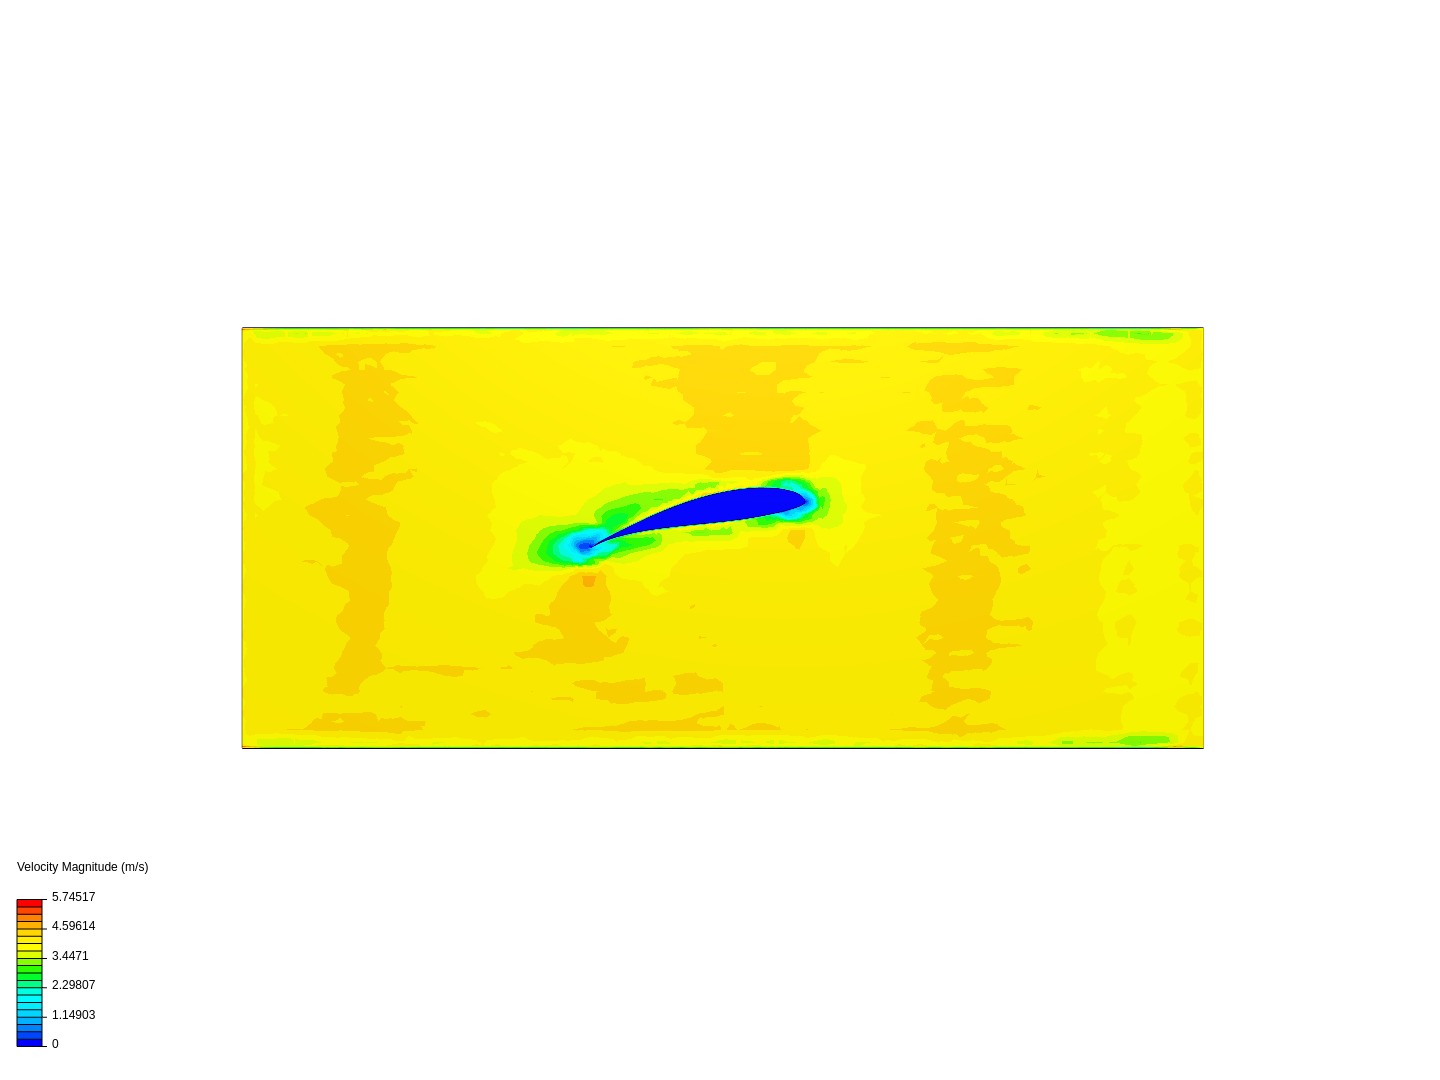 FX blade simulation image